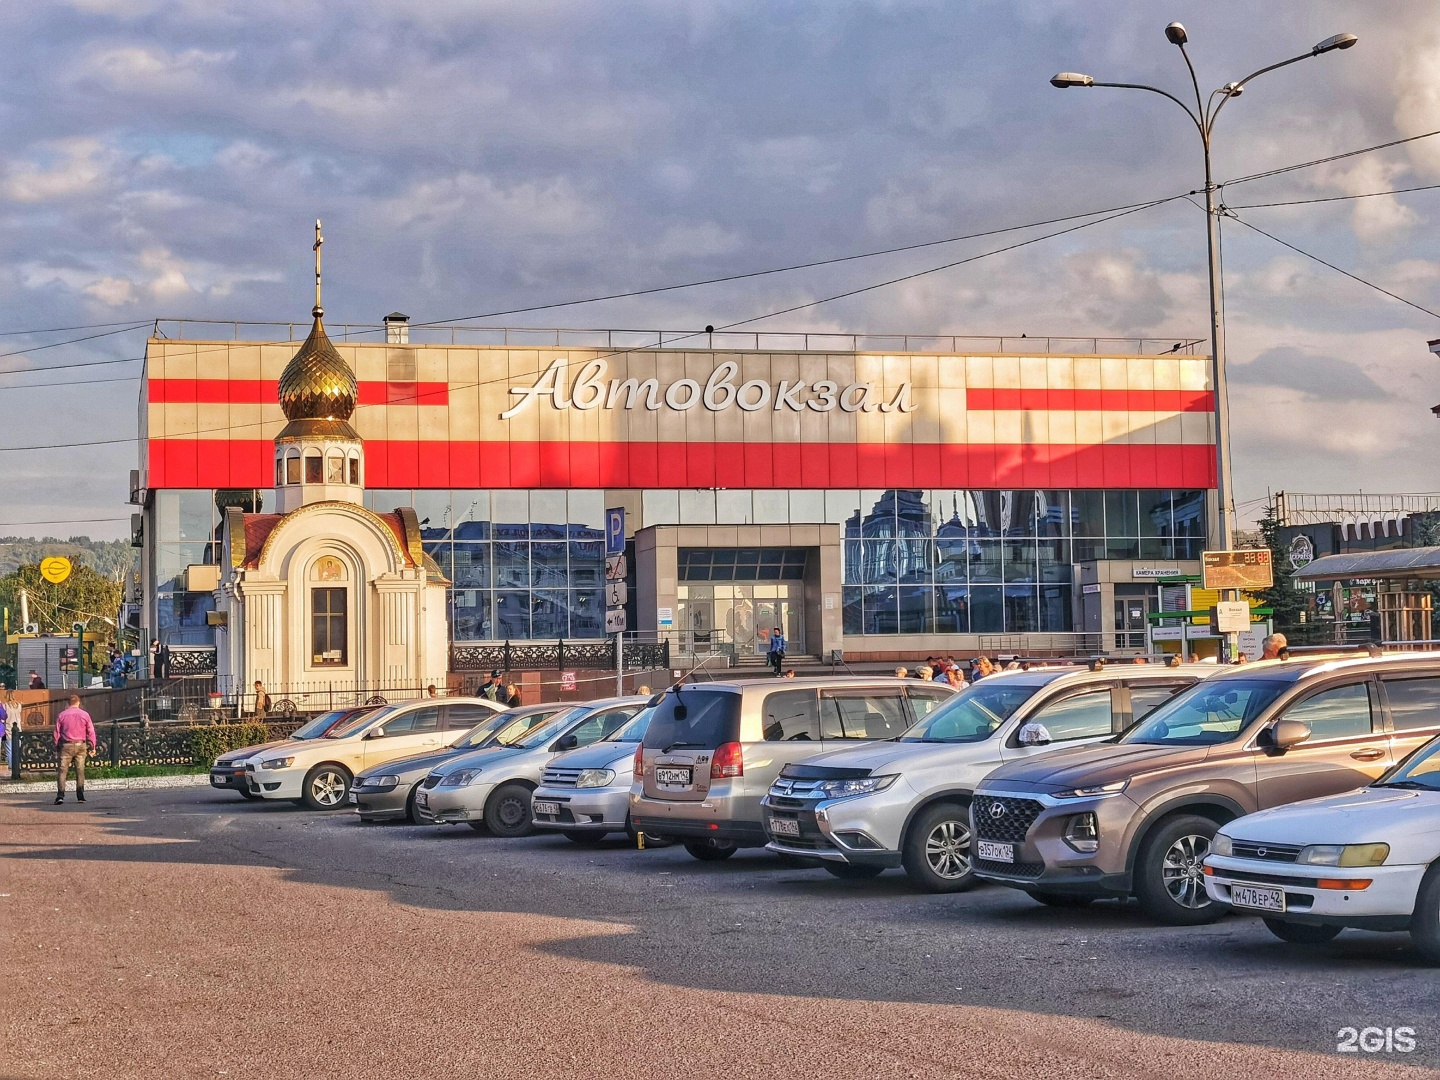 Why I Hate автовокзал Томск